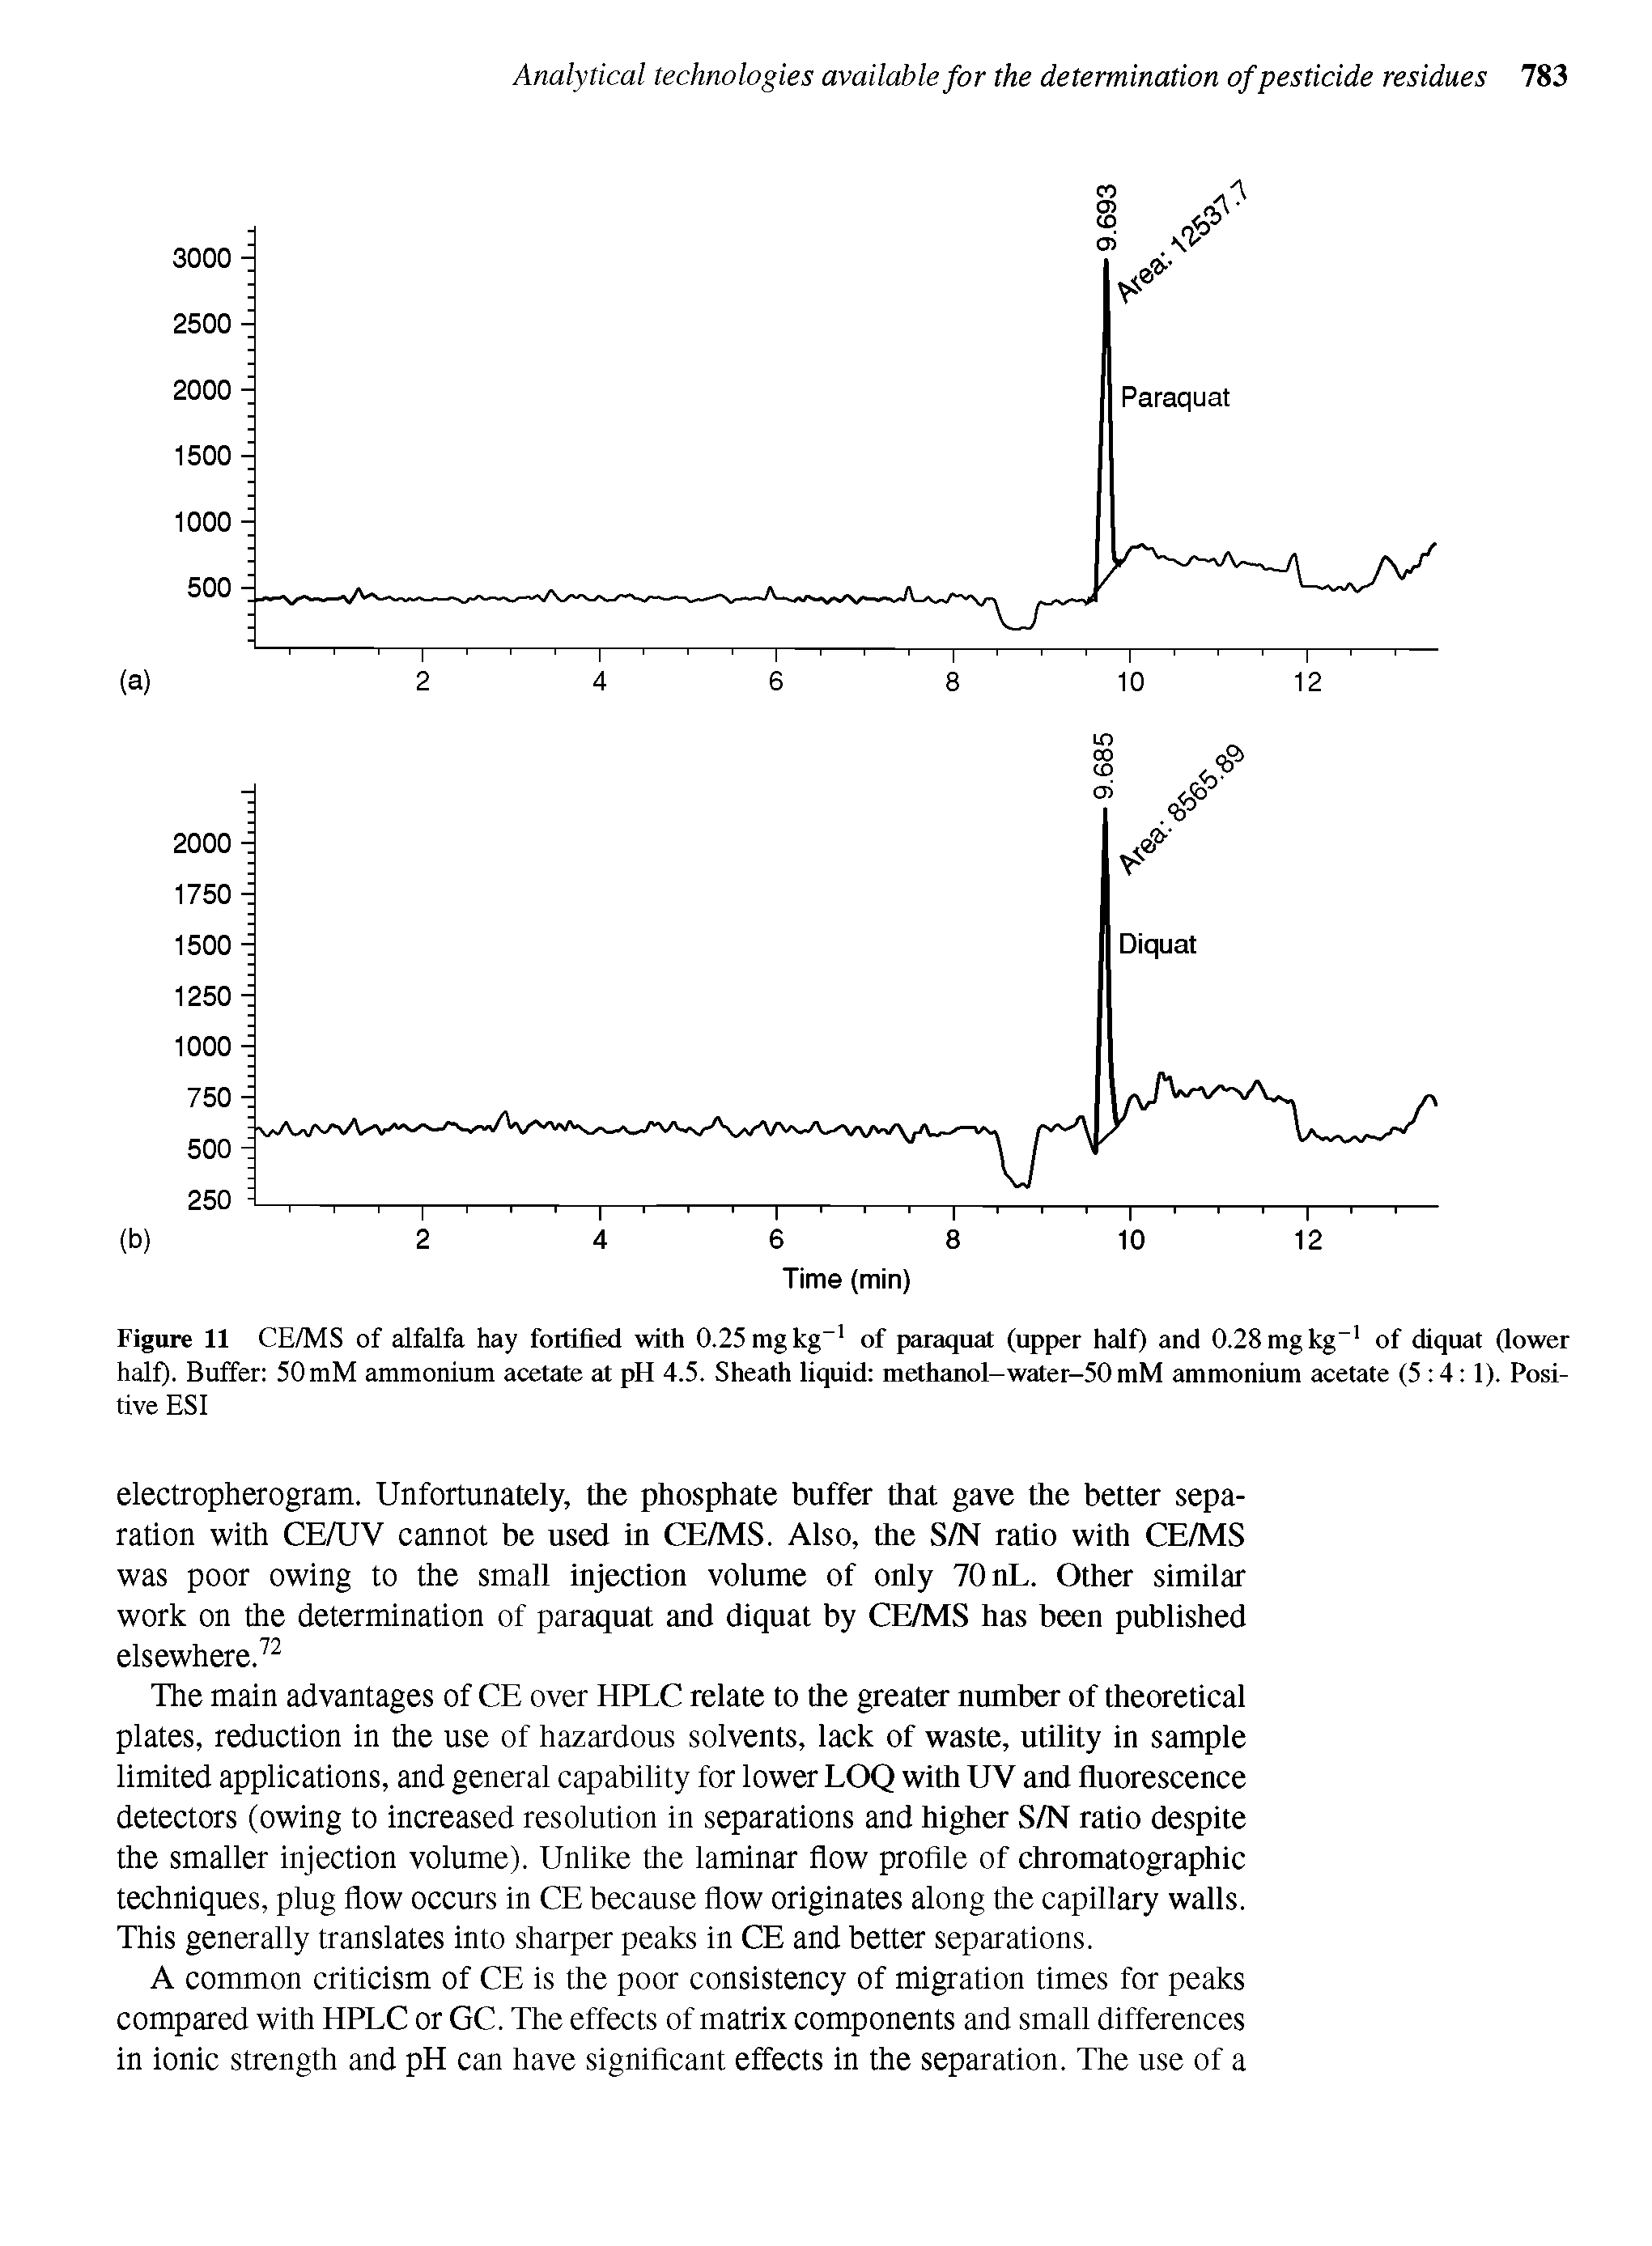 Figure 11 CE/MS of alfalfa hay fortified with 0.25mgkg of paraquat (upper half) and 0.28mgkg of diquat (lower half). Buffer 50mM ammonium acetate at pH 4.5. Sheath liquid methanol-water-50mM ammonium acetate (5 4 1). Positive ESI...